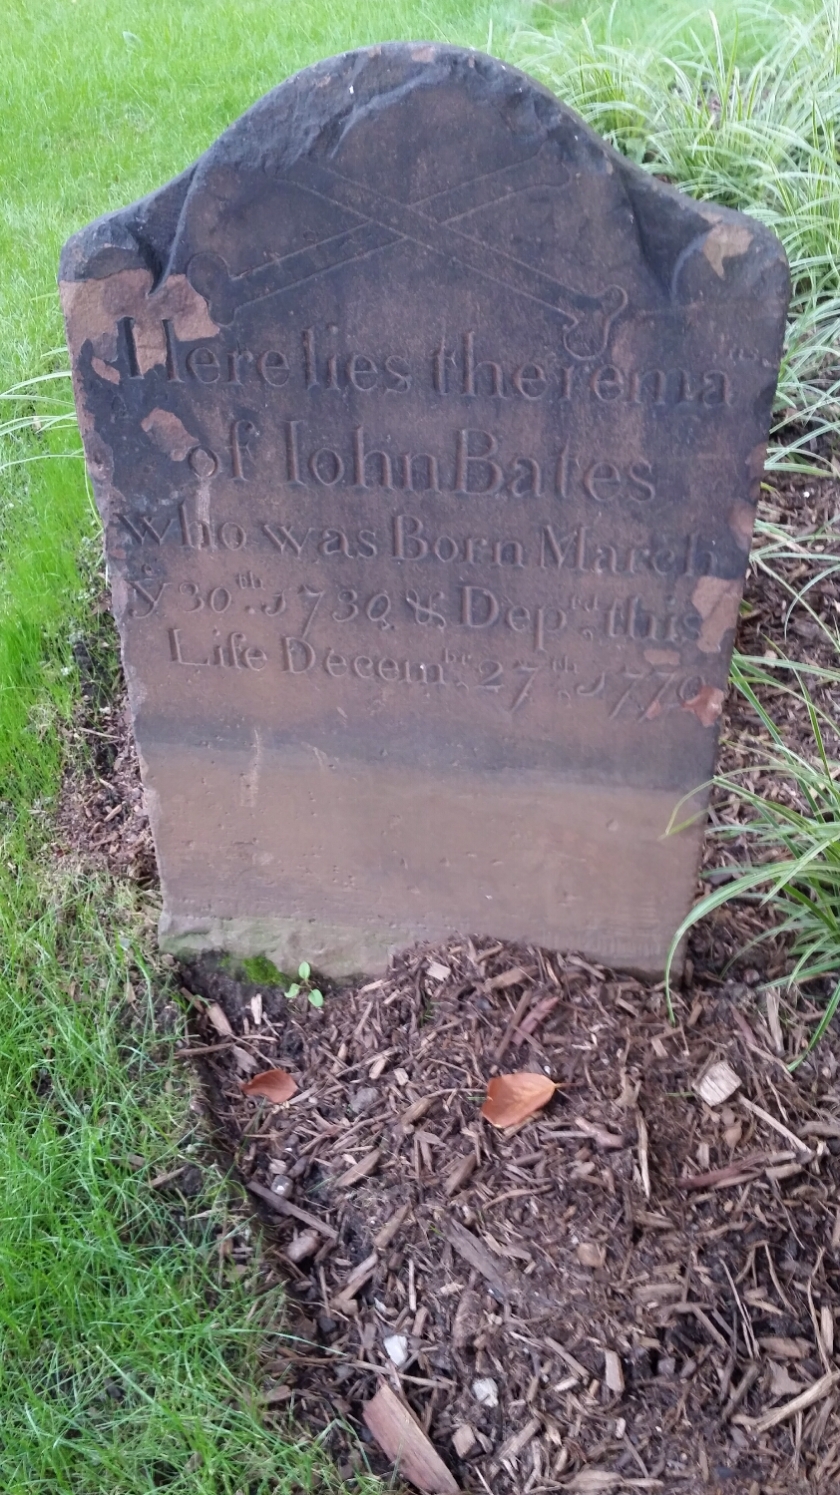 Gravestone with crossbones 18th century